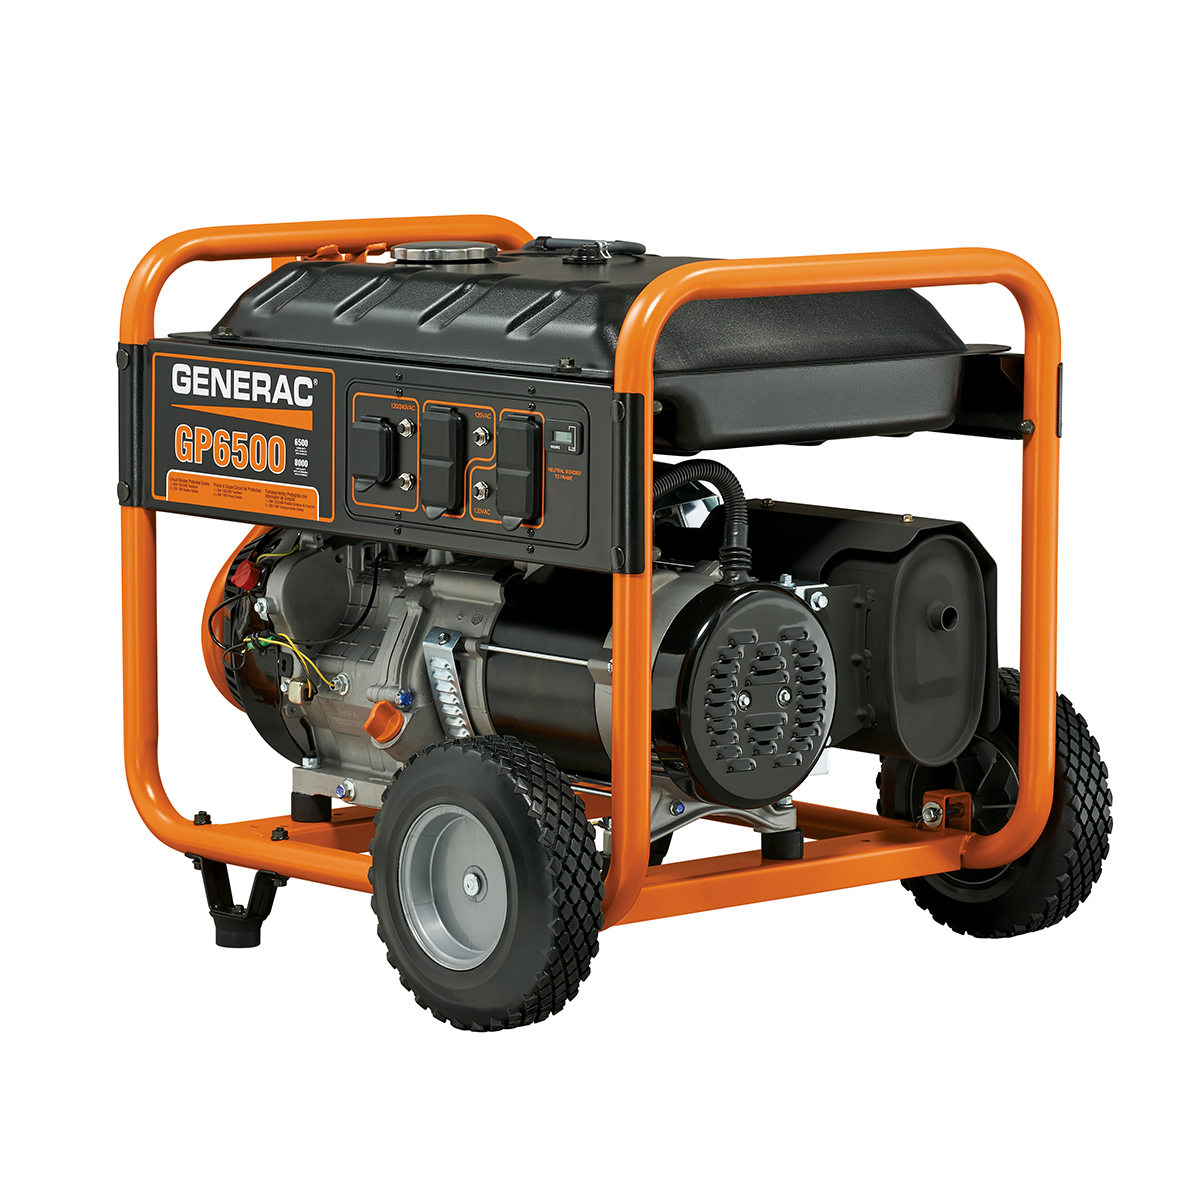 New at Summit Racing Equipment: Generac Portable Generators